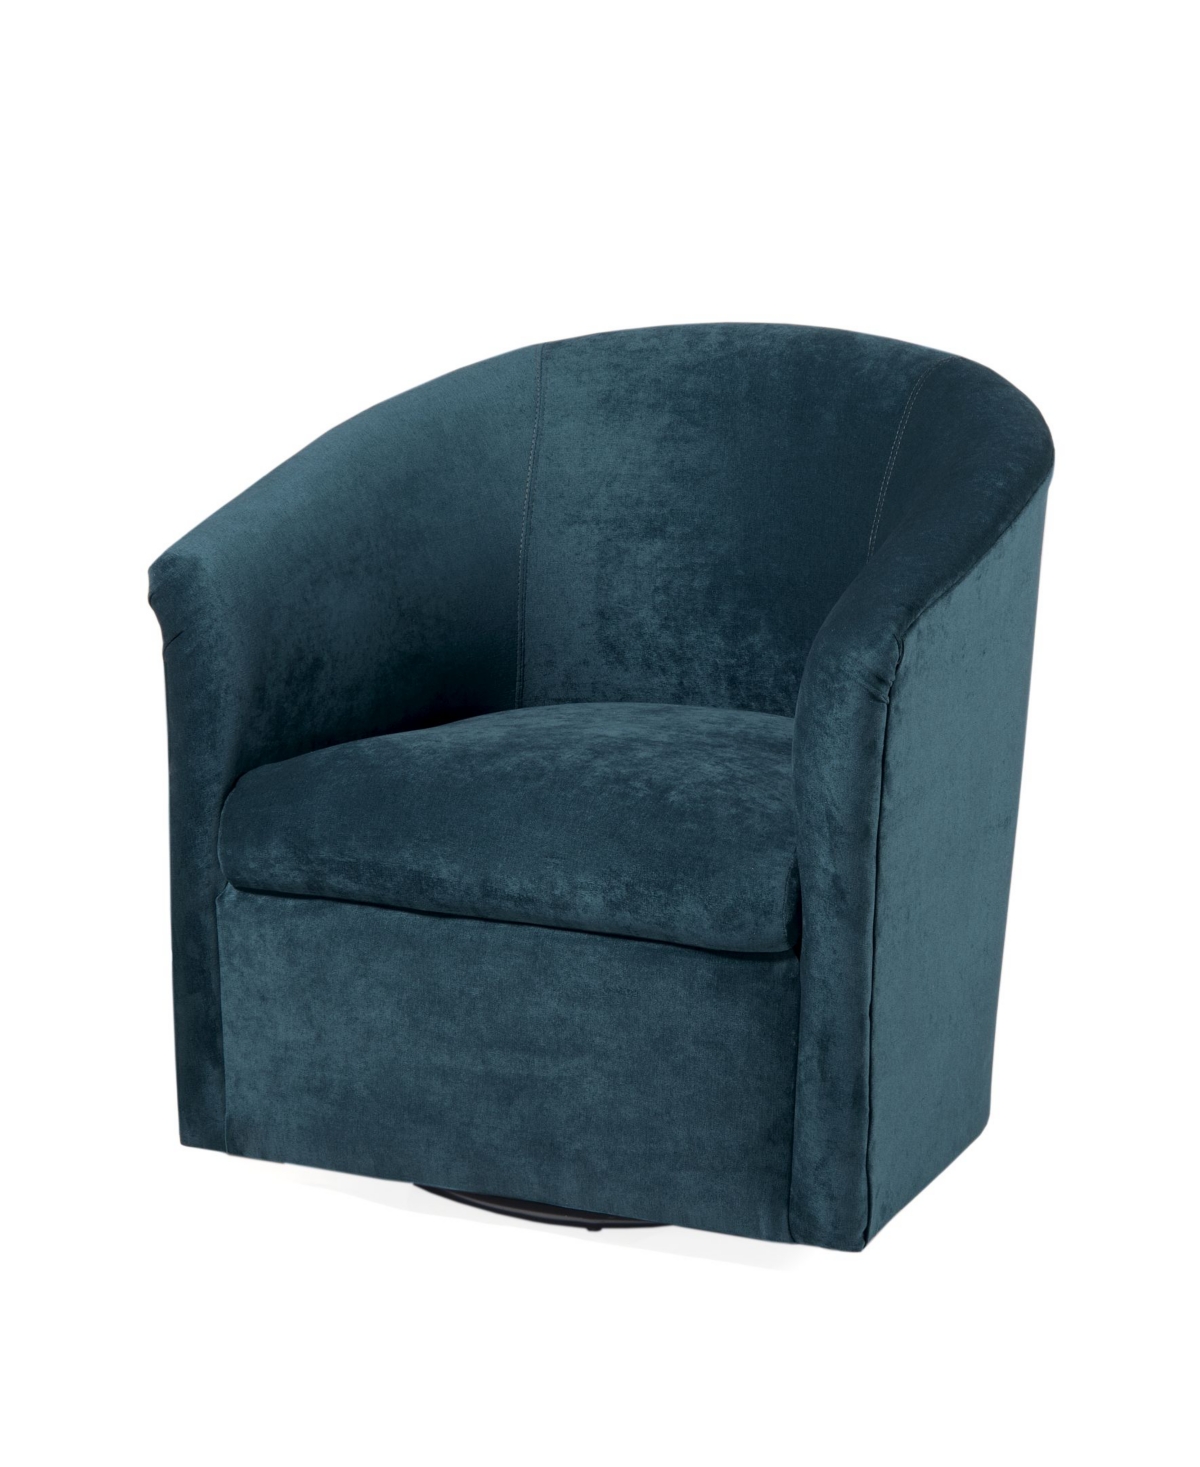 Comfort Pointe Elizabeth Swivel Chair In Aqua